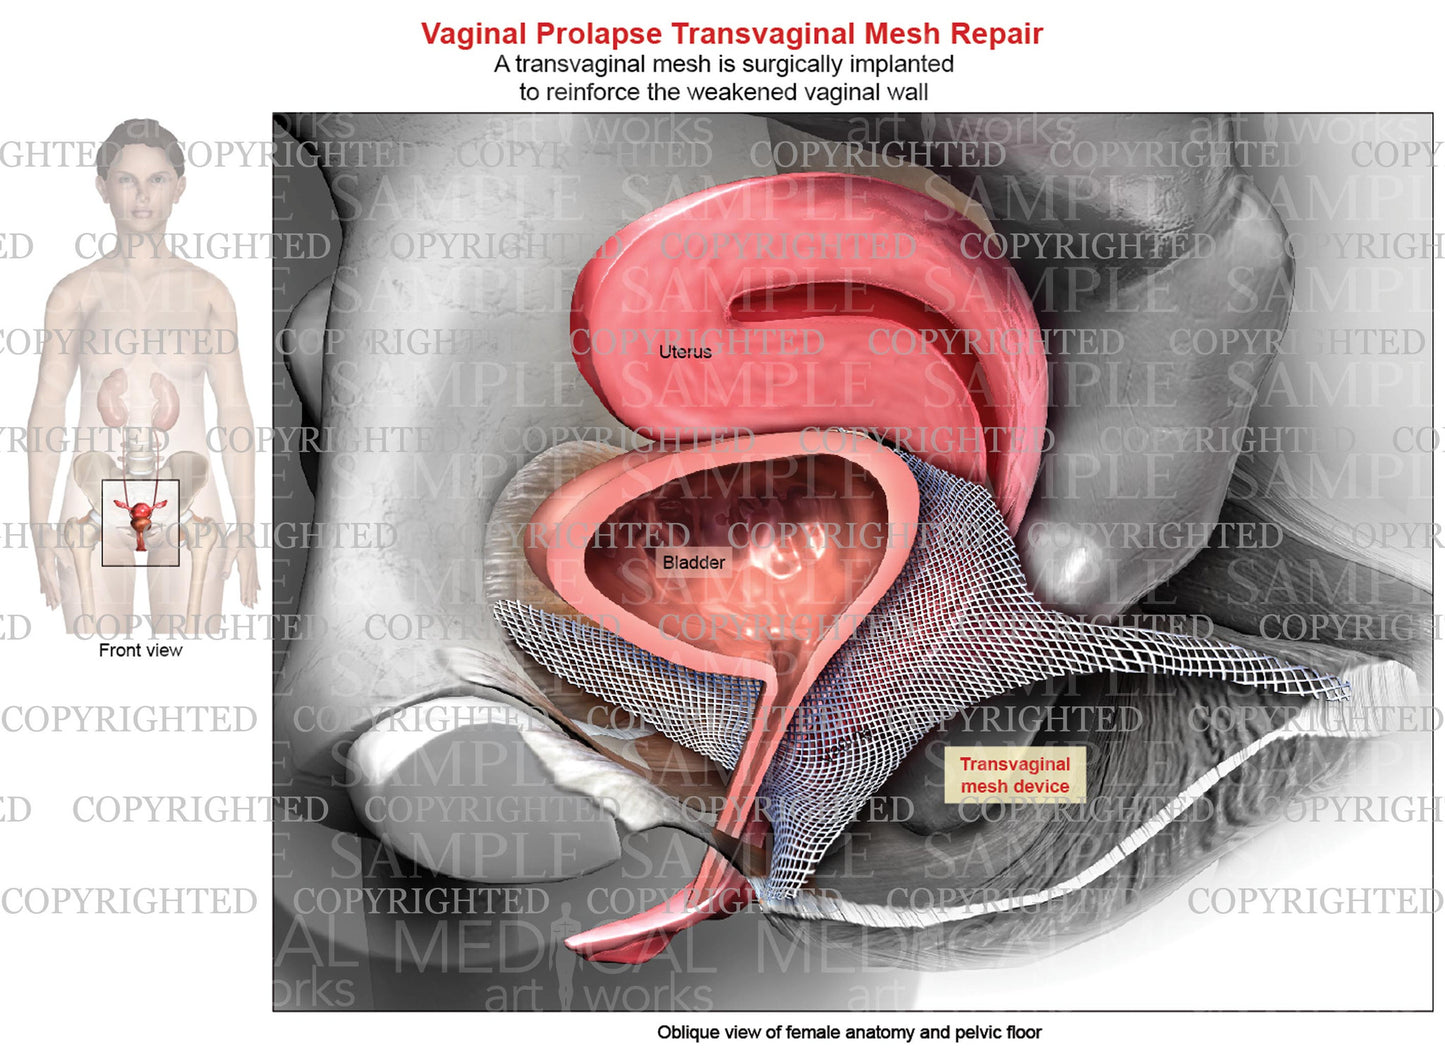 Transvaginal Mesh Repair of Vaginal Prolapse